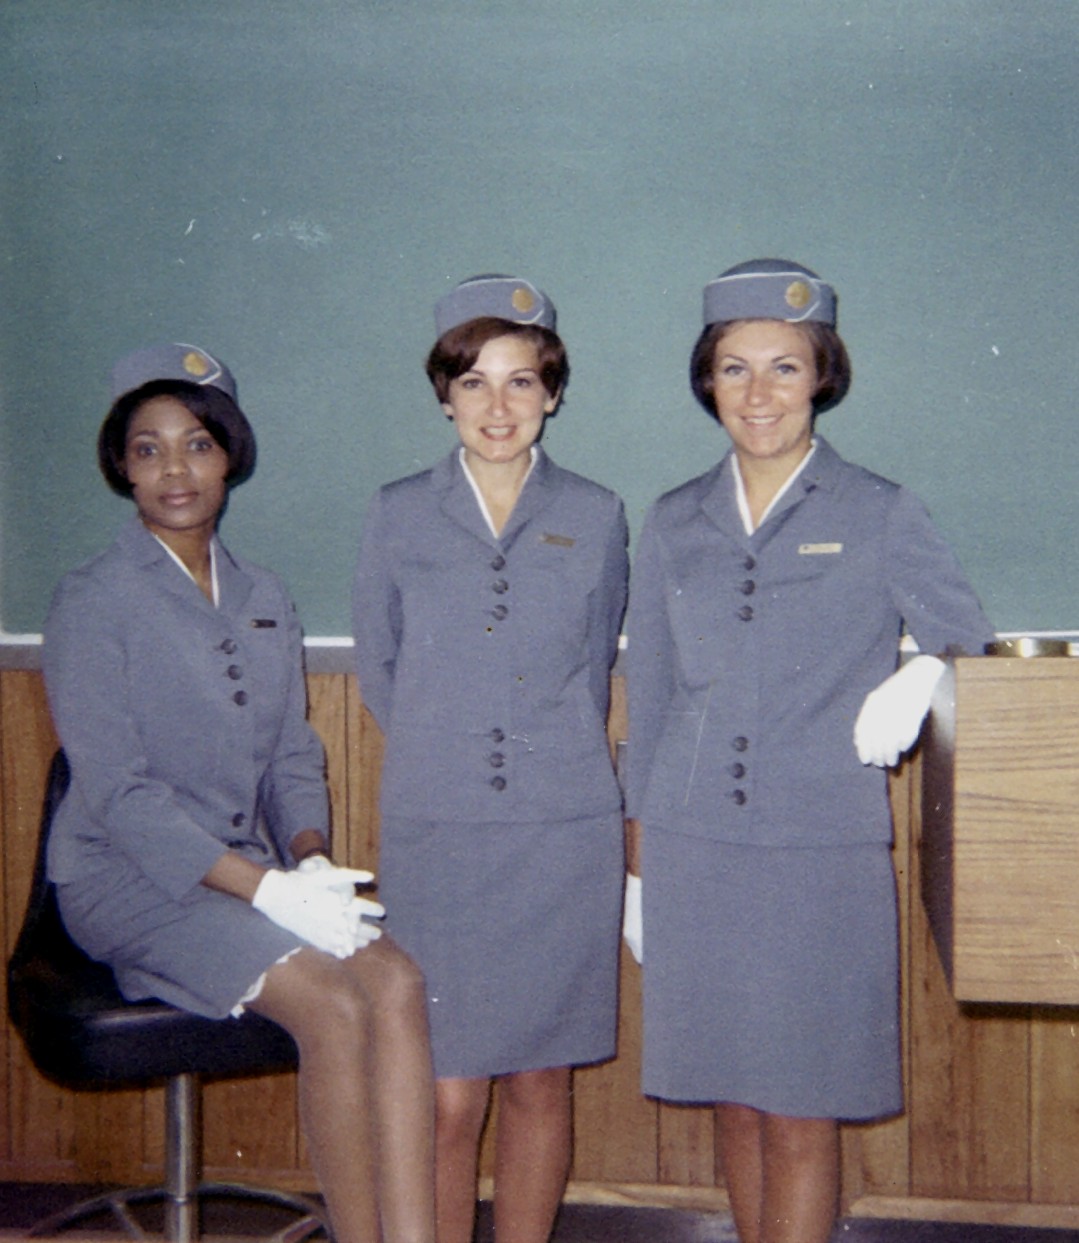 1968 April, Ouida (Judy) Stewart, Donuta (Diane) Wolk, Maureen van Leeuwen pose by the black board in a classroom at the Pan Am Flight Service Academy